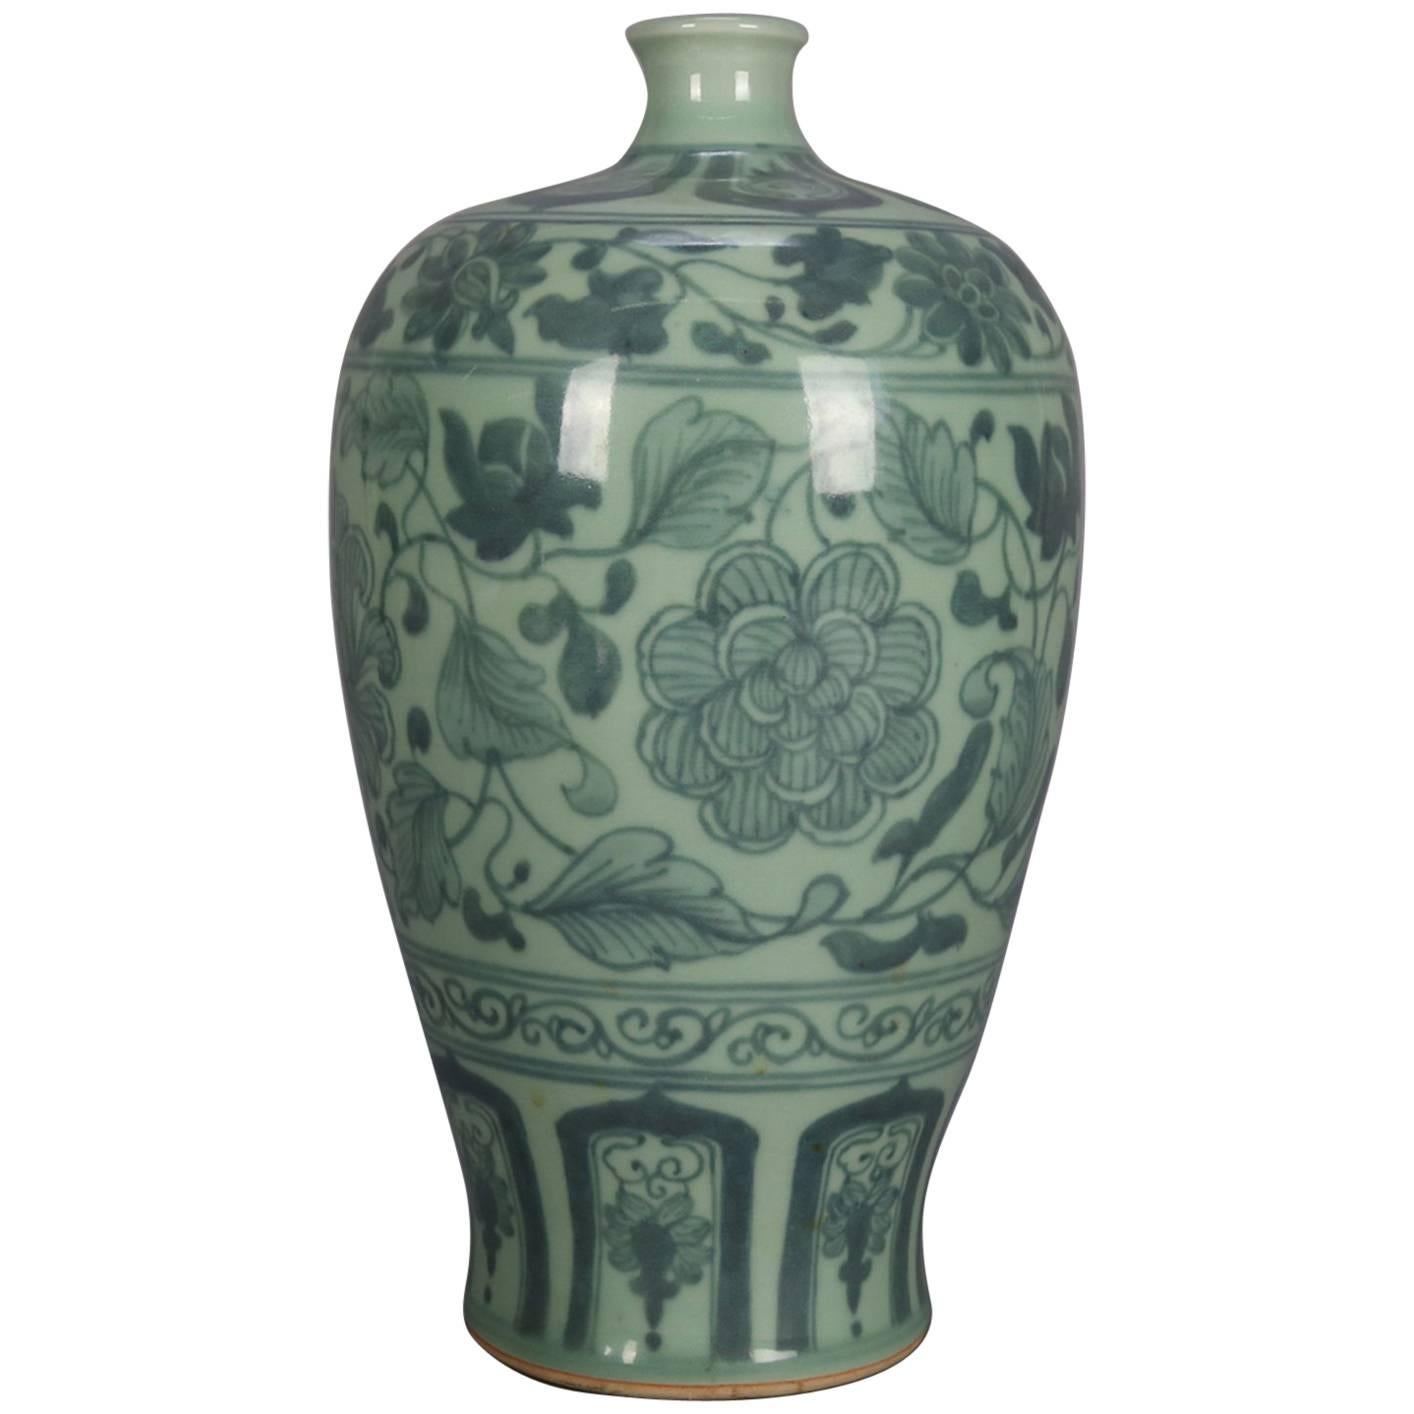 Chinese Celadon Porcelain Vase, Floral and Leaf Decoration, 20th Century